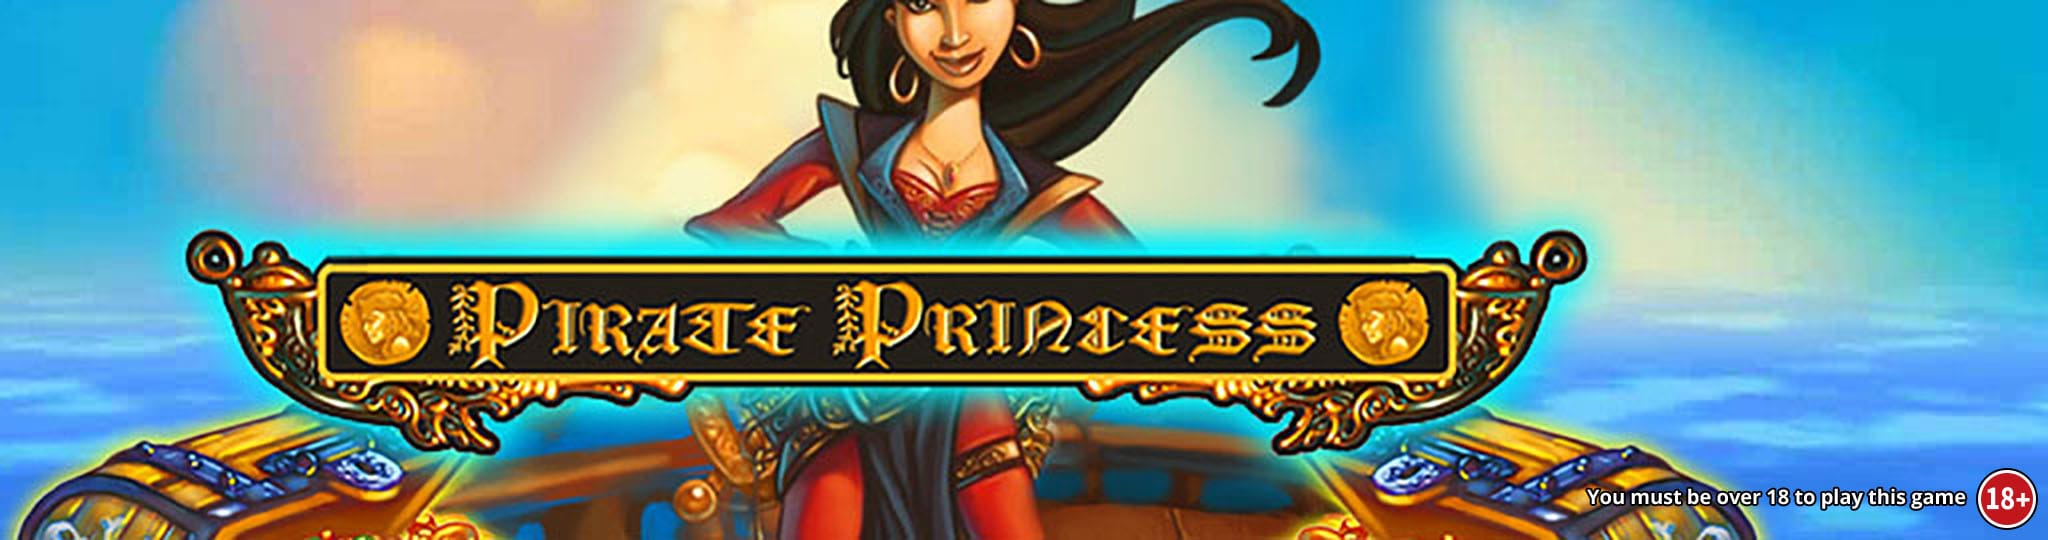 Pirate Princess Logo